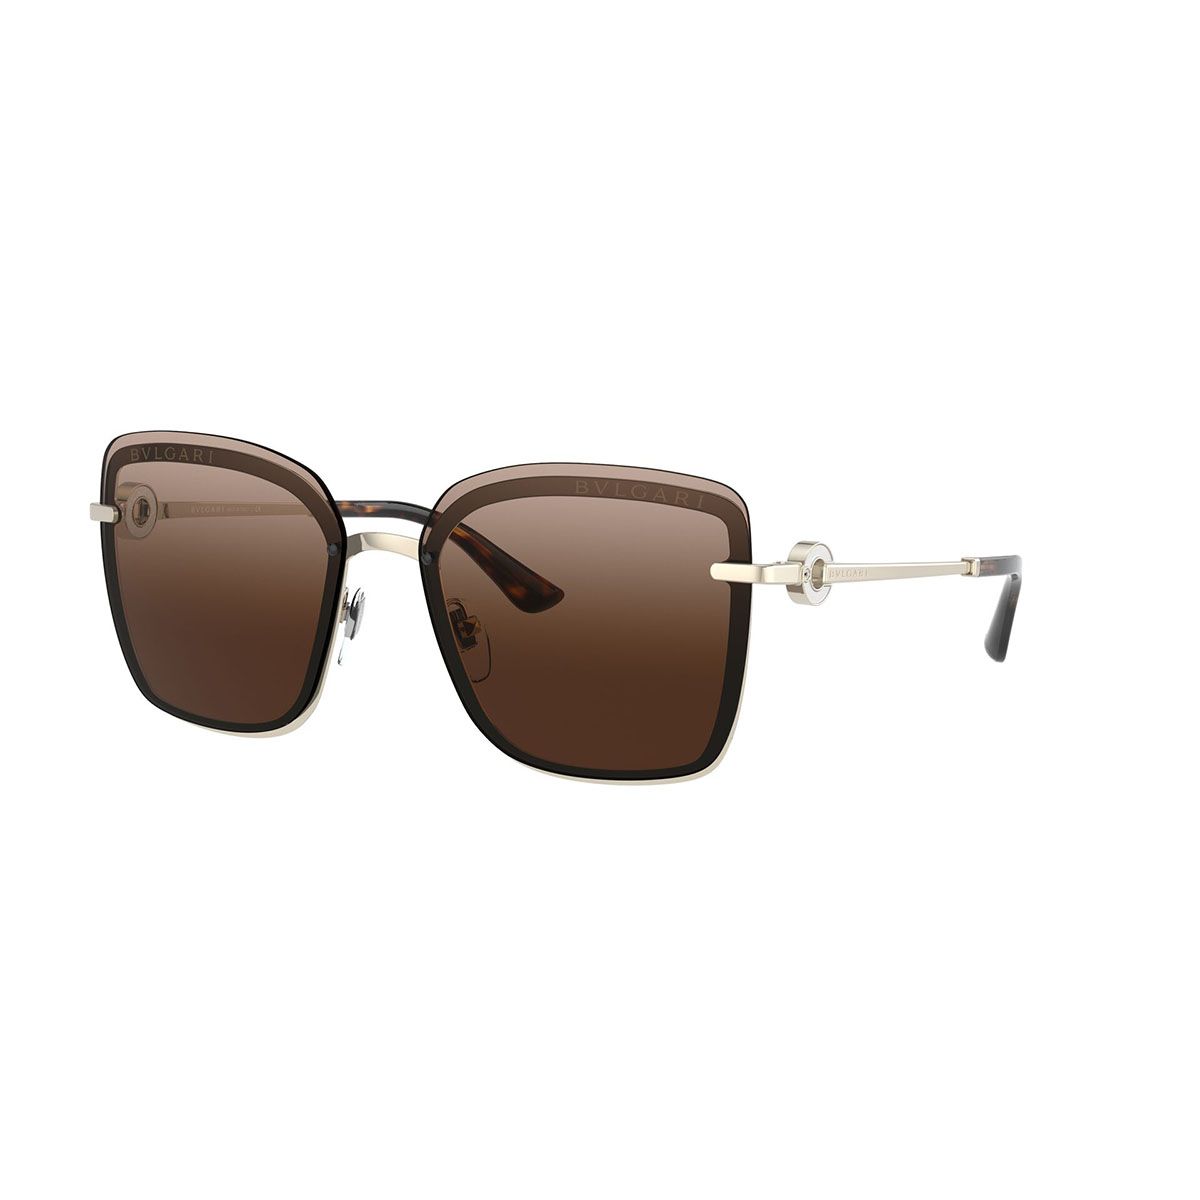 BV6151B Square Sunglasses 278 13 - size 59